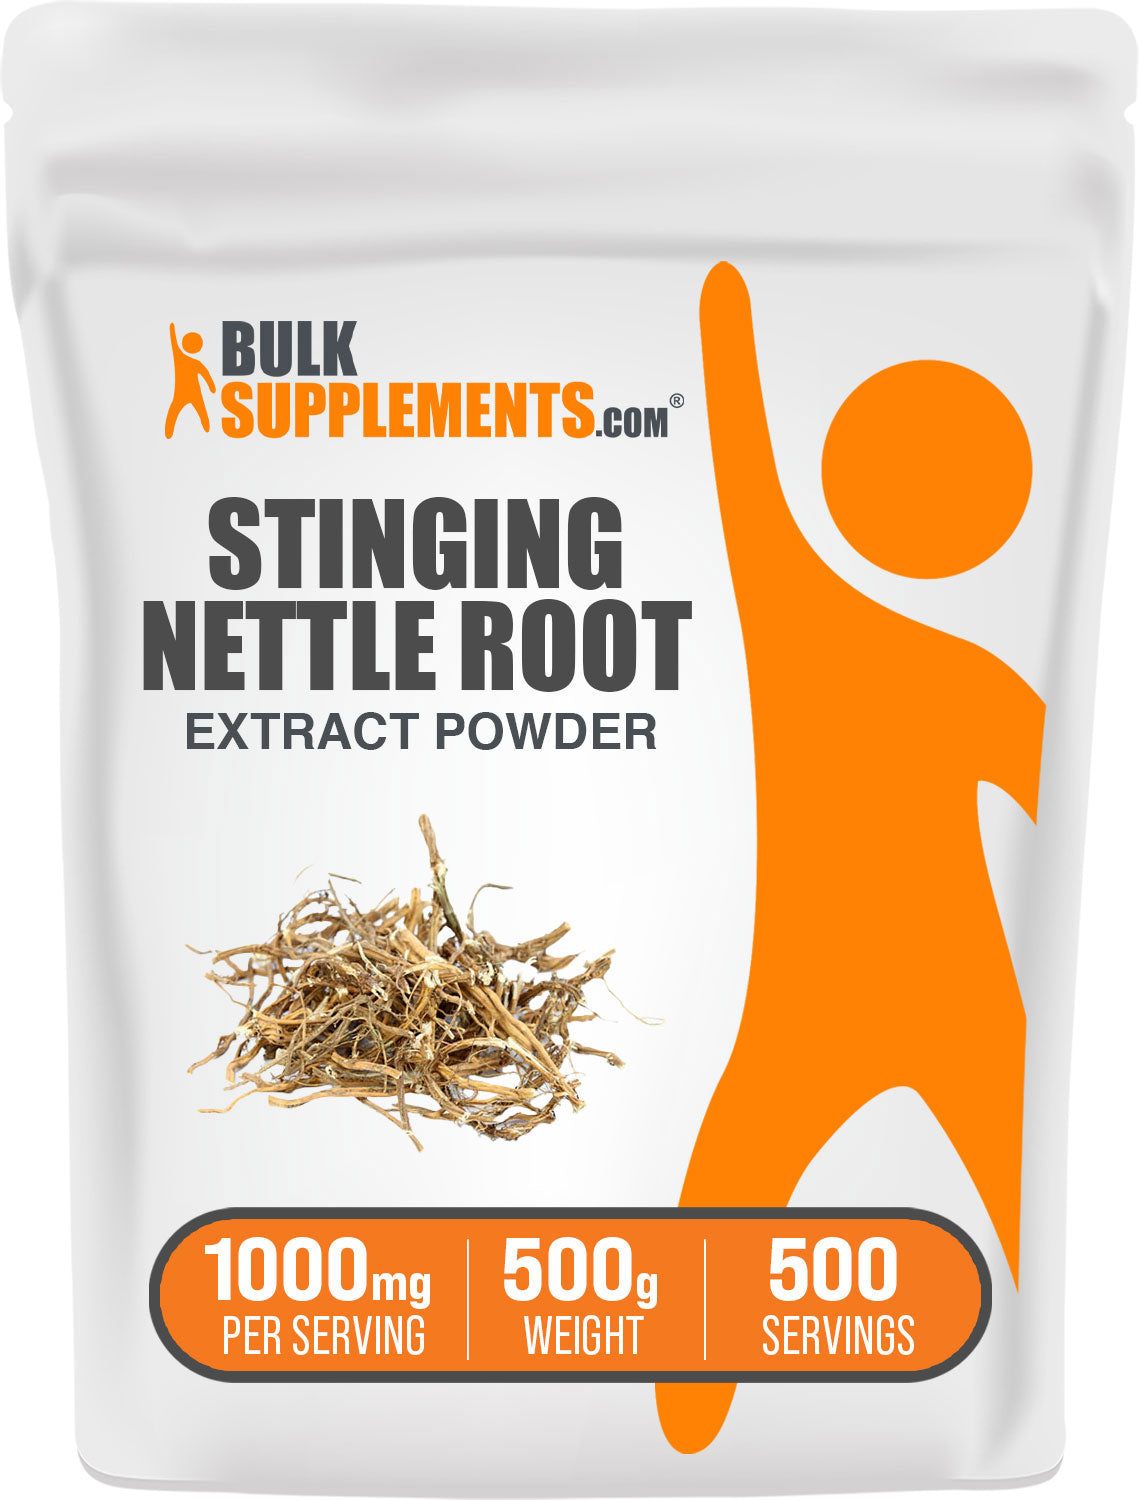 BulkSupplements.com Nettle Extract Powder 500g